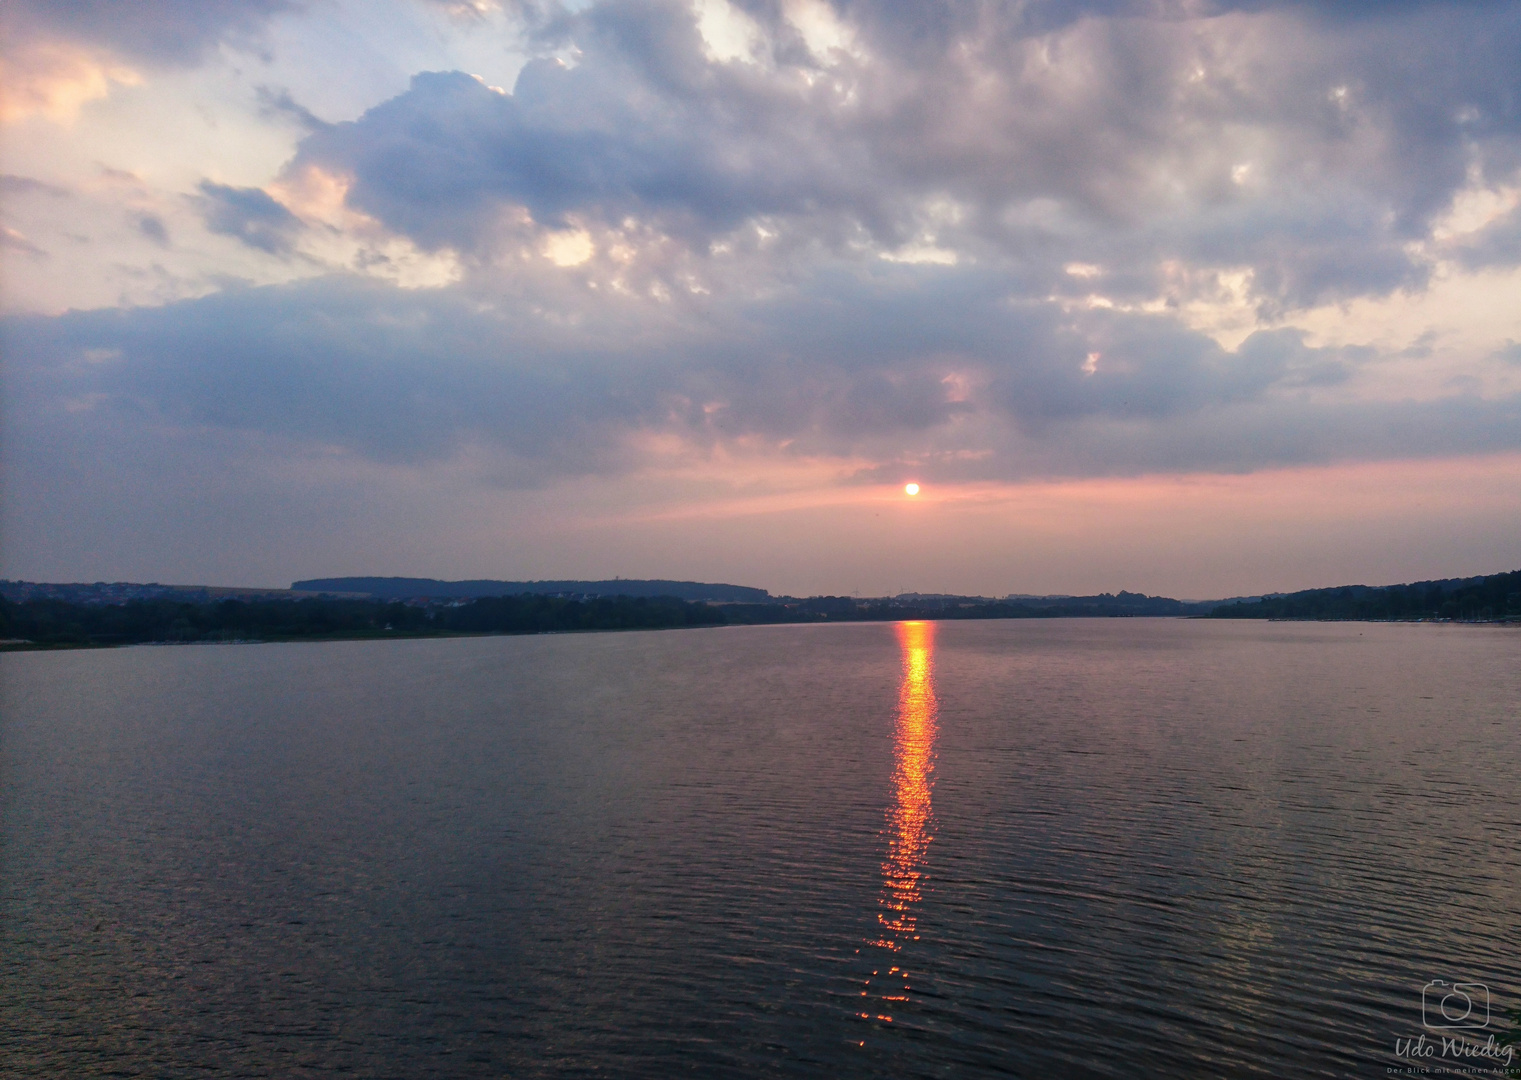 Sonnenaufgang am Möhnesee